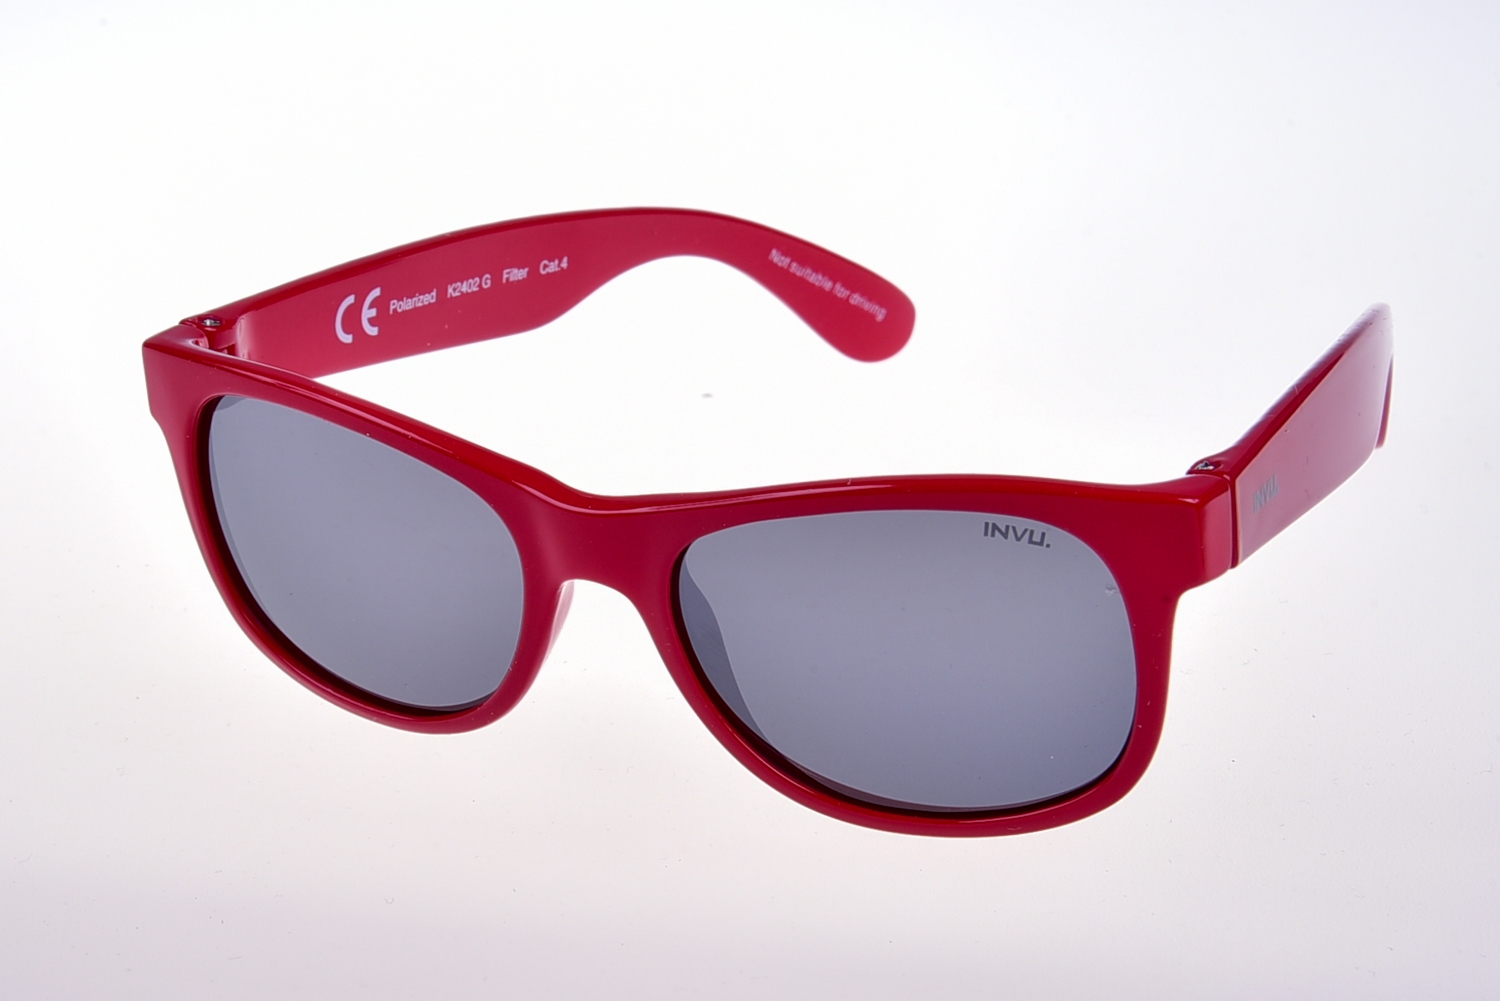 INVU. Kids K2402G - Slnečné okuliare pre deti 1-3 r.